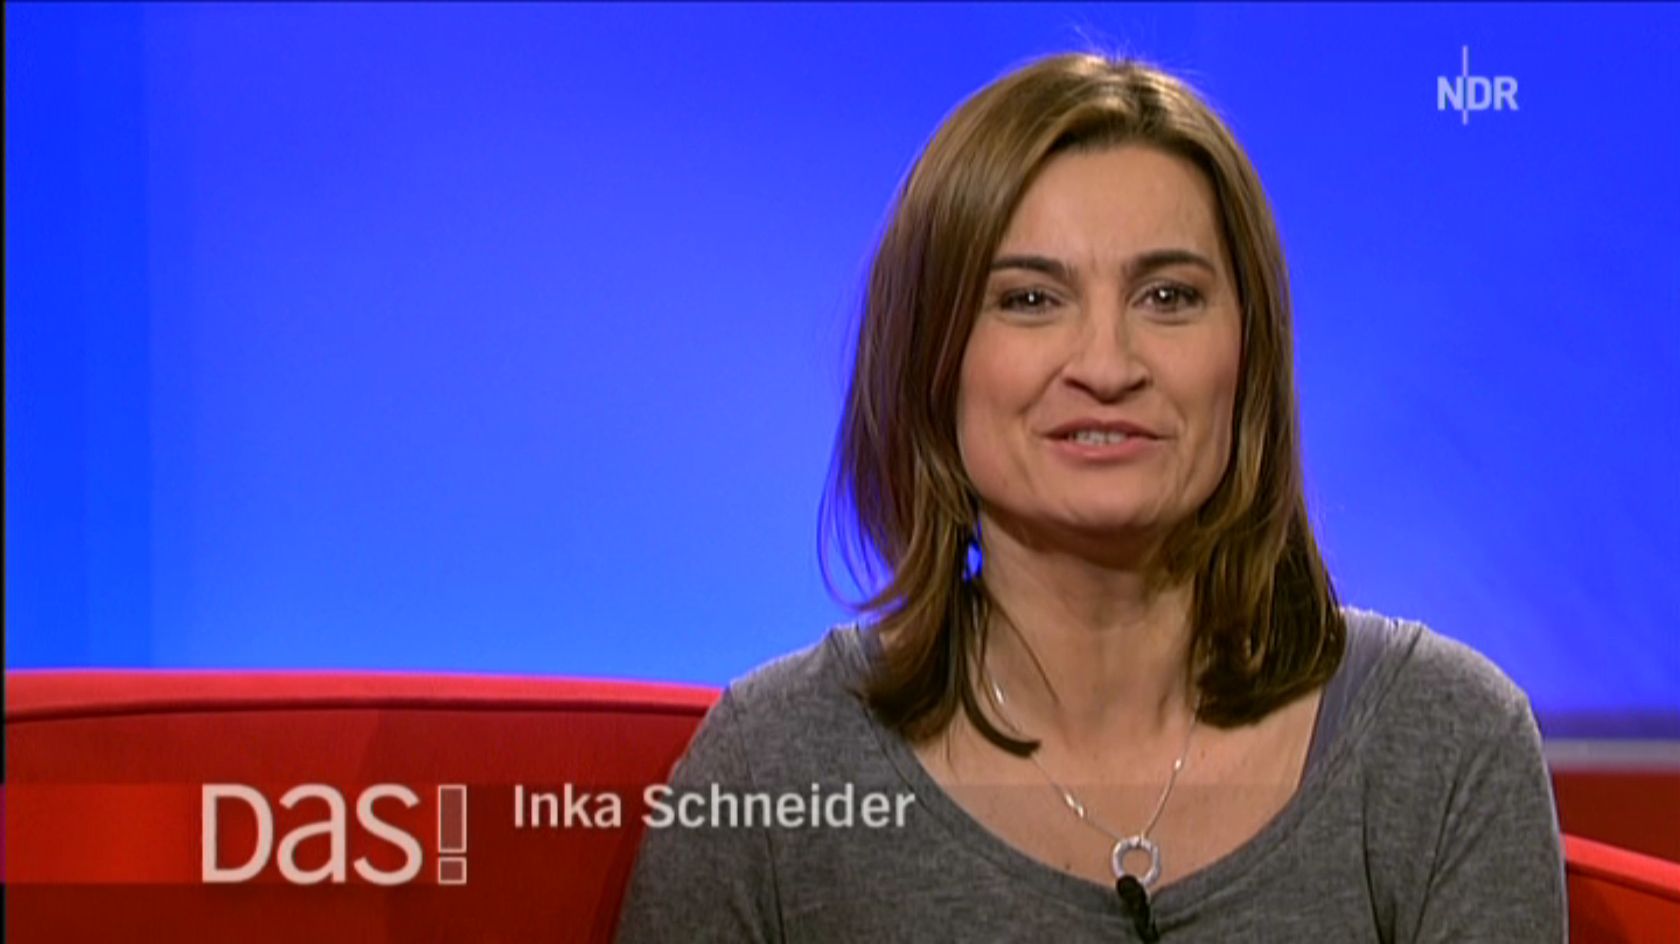 Inka Schneider DAS 01 12 10 for 124